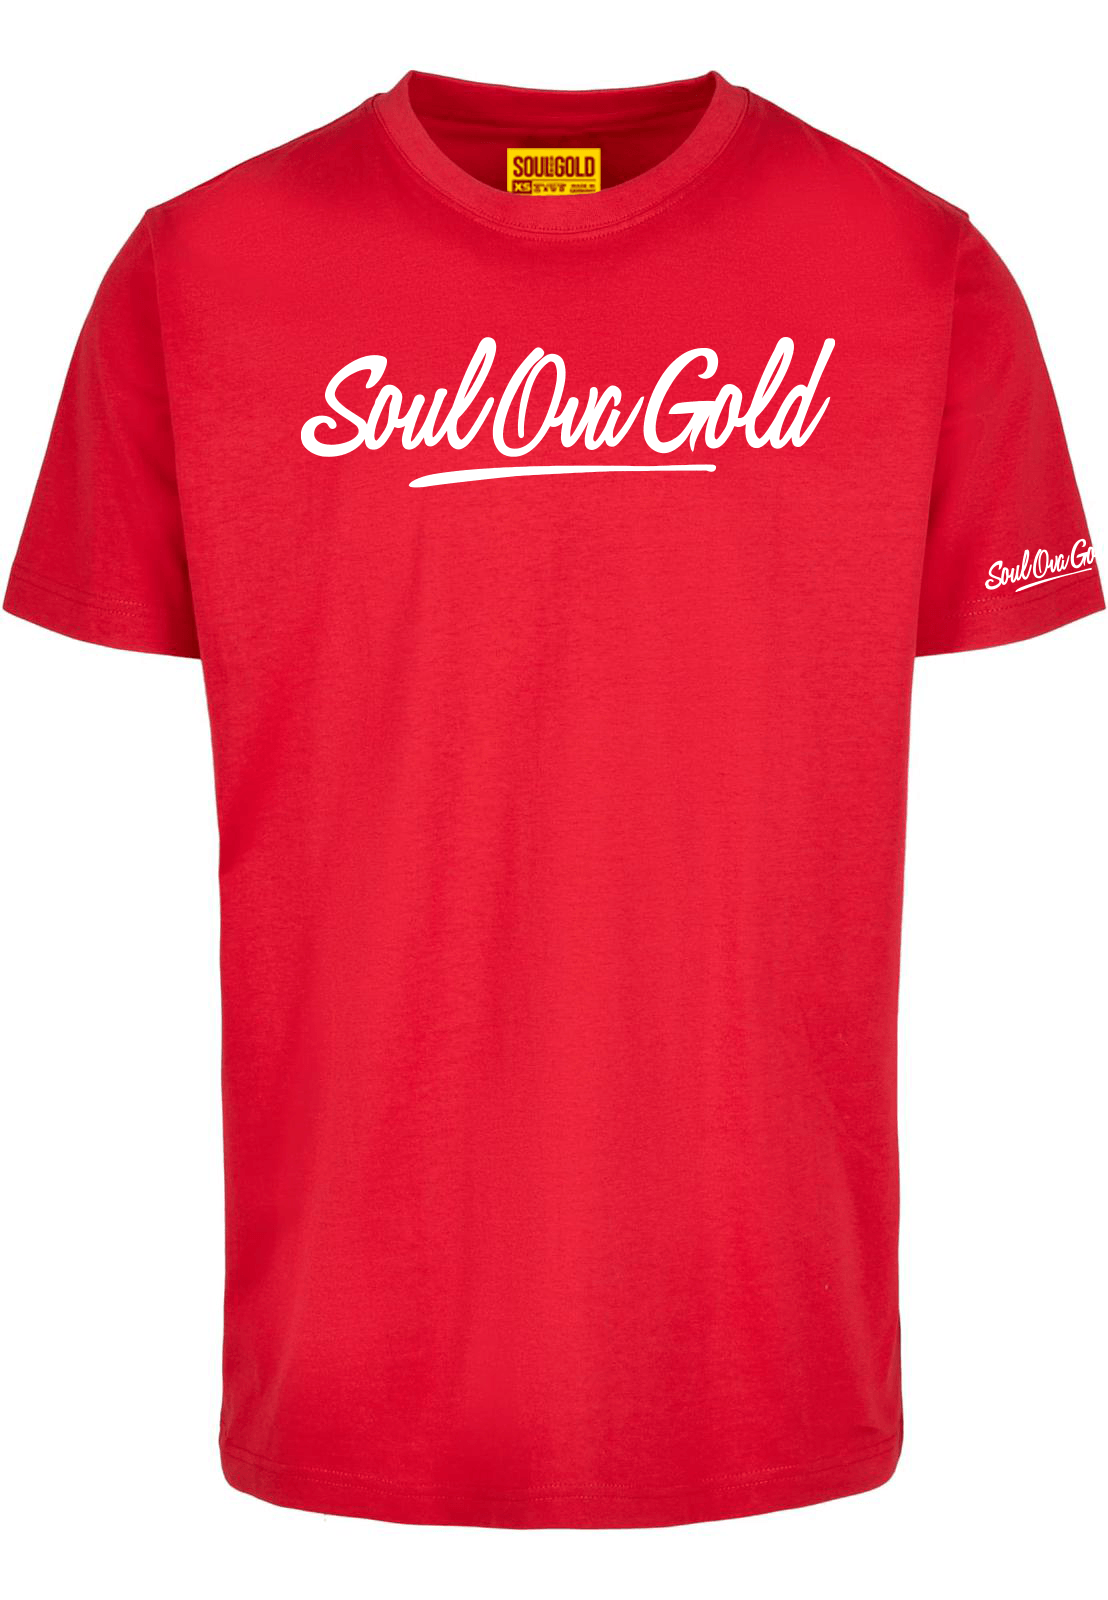 Soul Ova Gold Men's Tees Stick 2 The Script Classic fit T-Shirt (Fire Red)